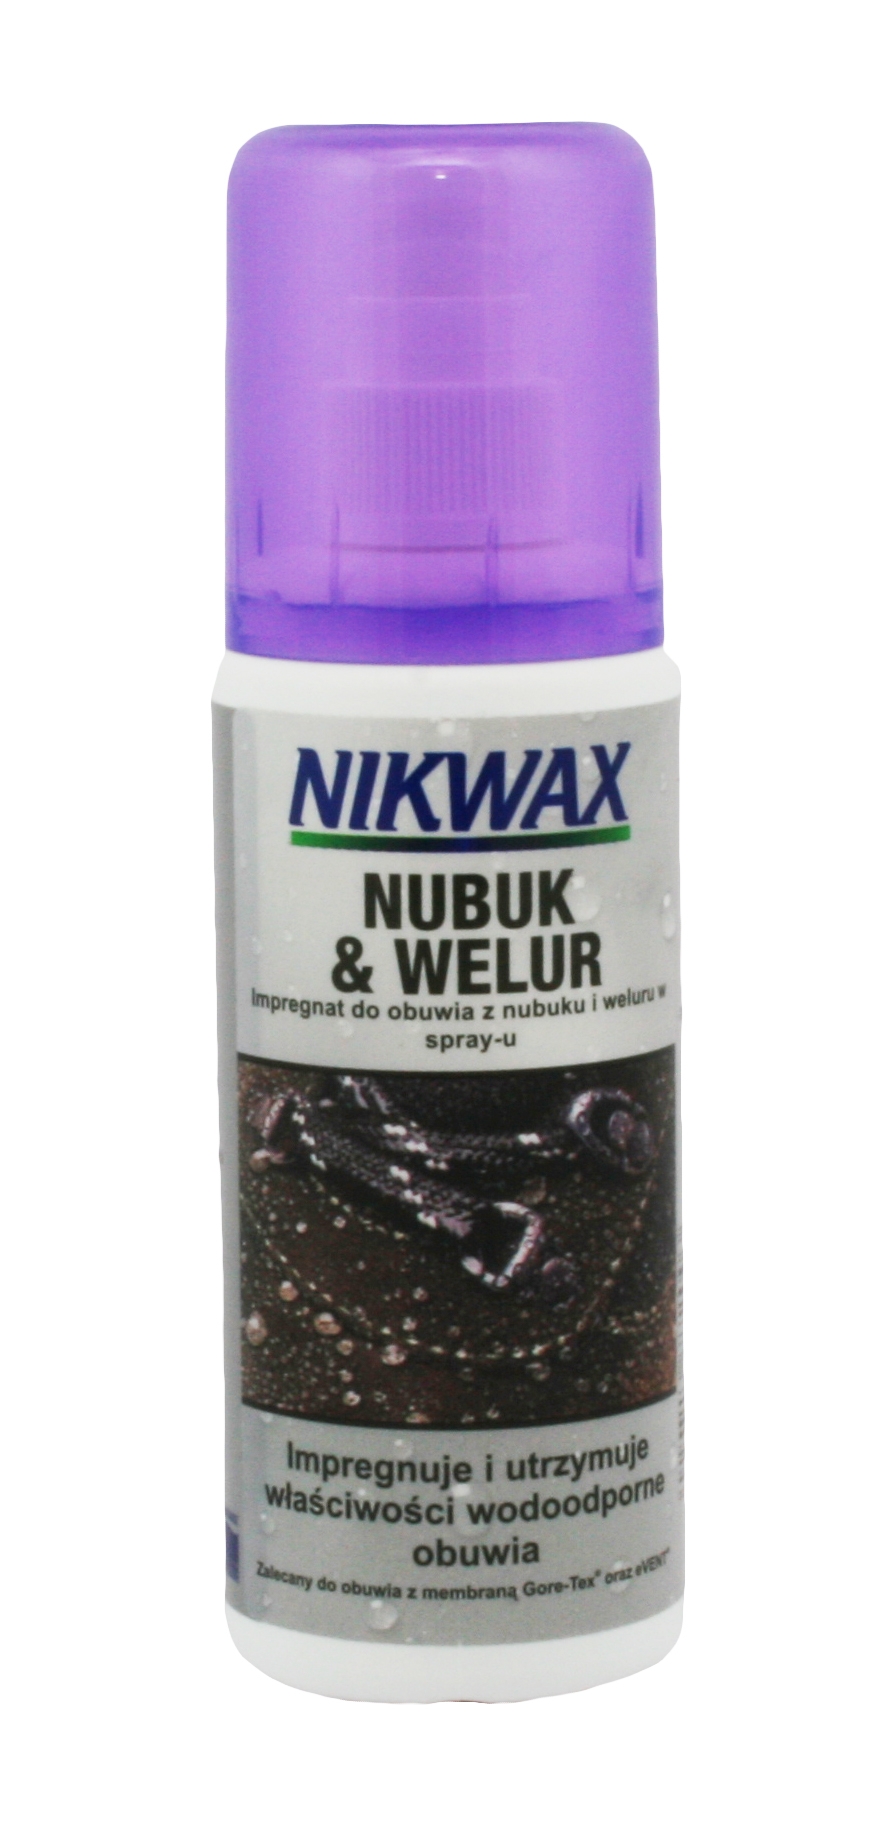 Image of Nikwax NI-36 impregnat nubuk/welur spray 125 ml (772P01)